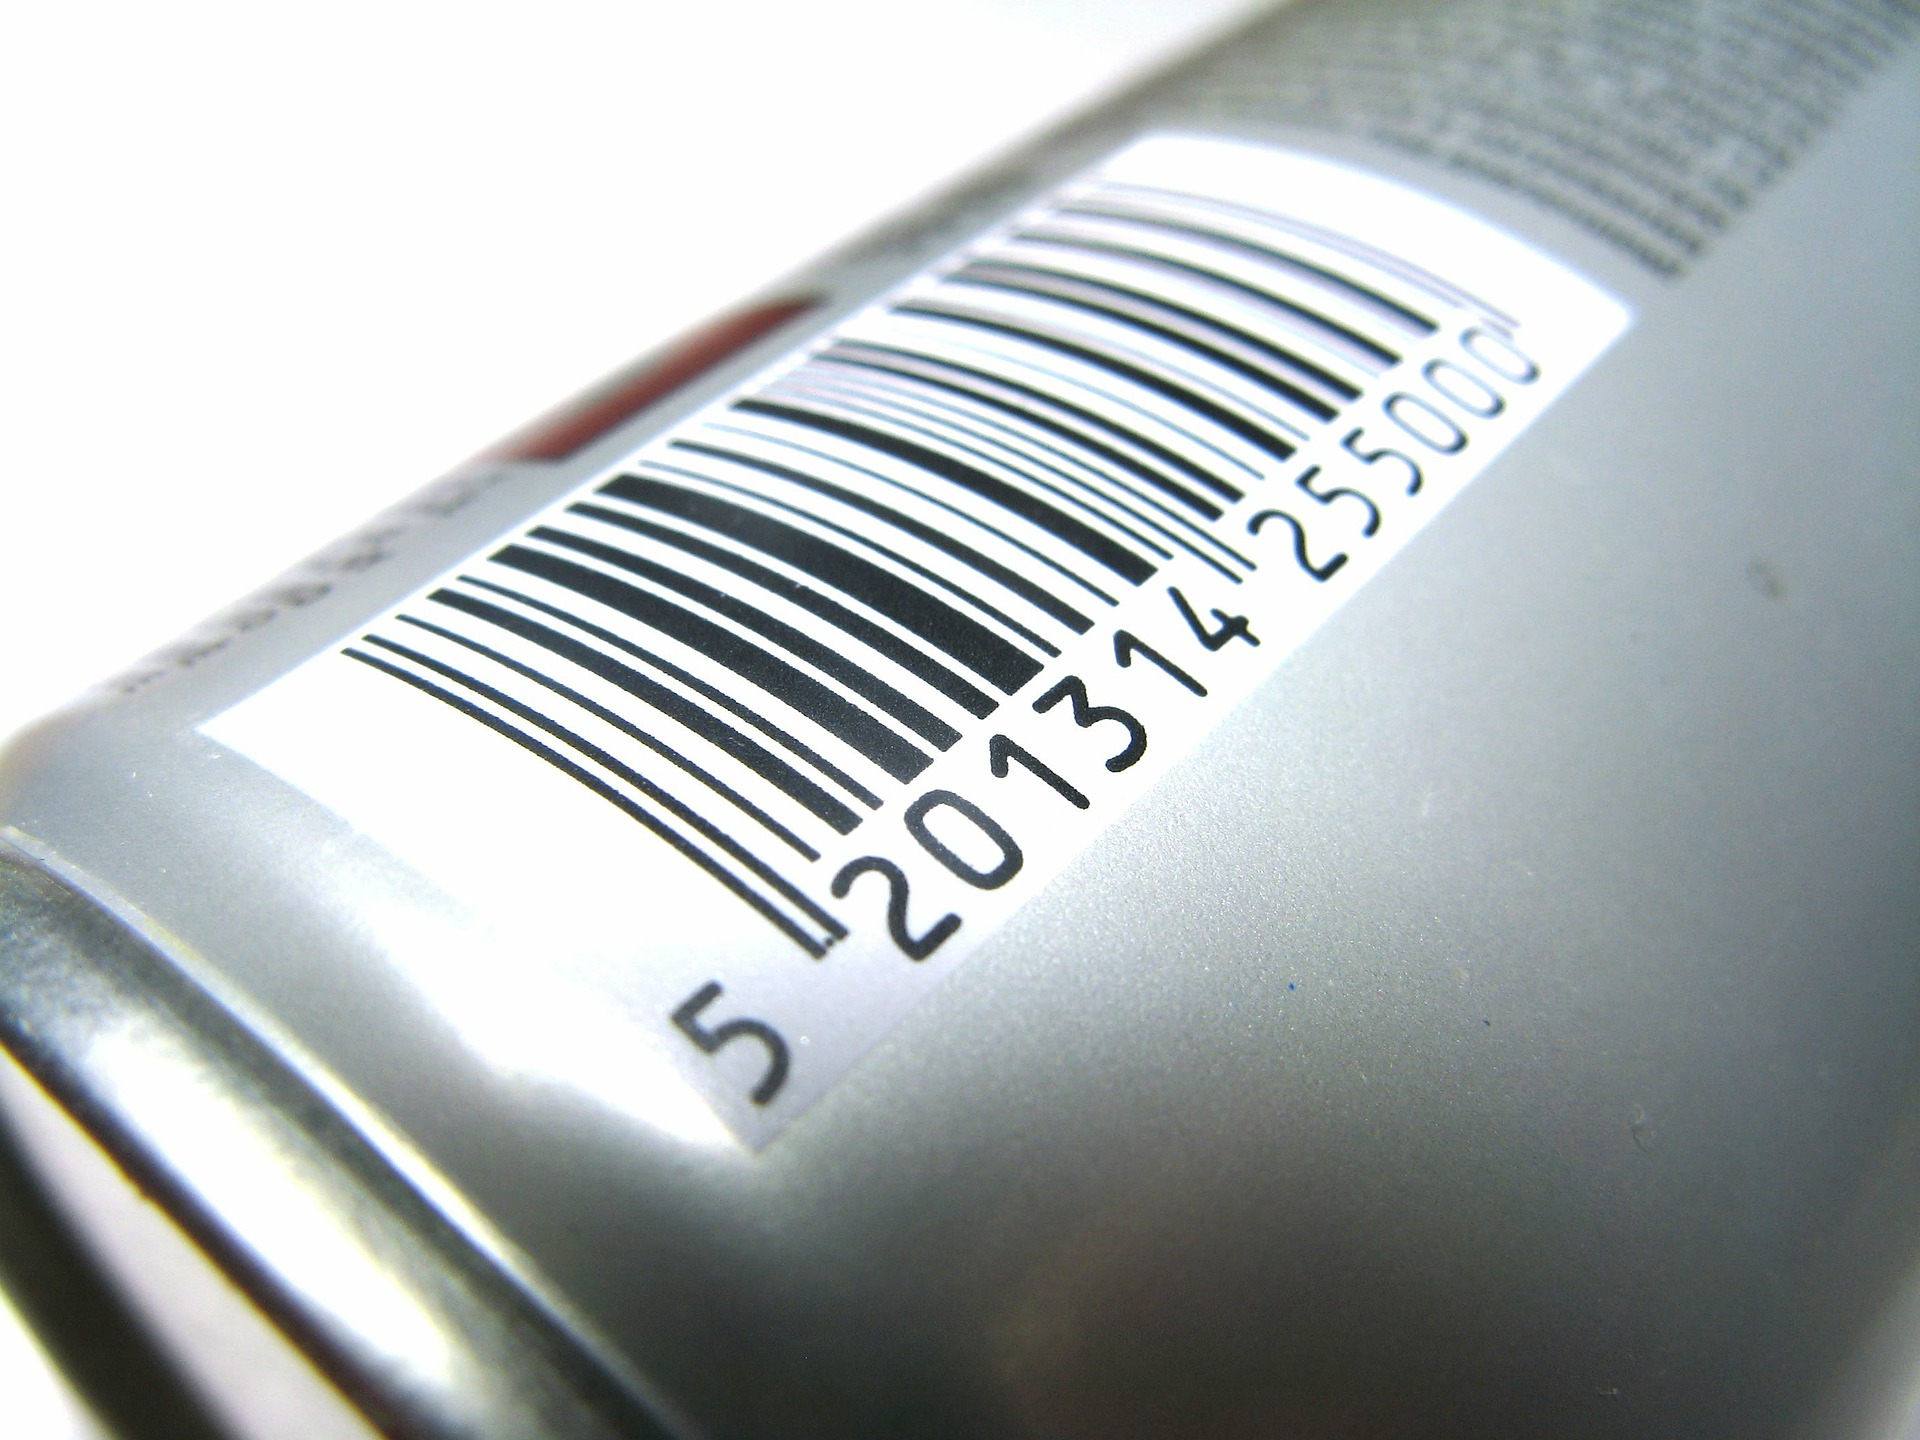 a UPC barcode